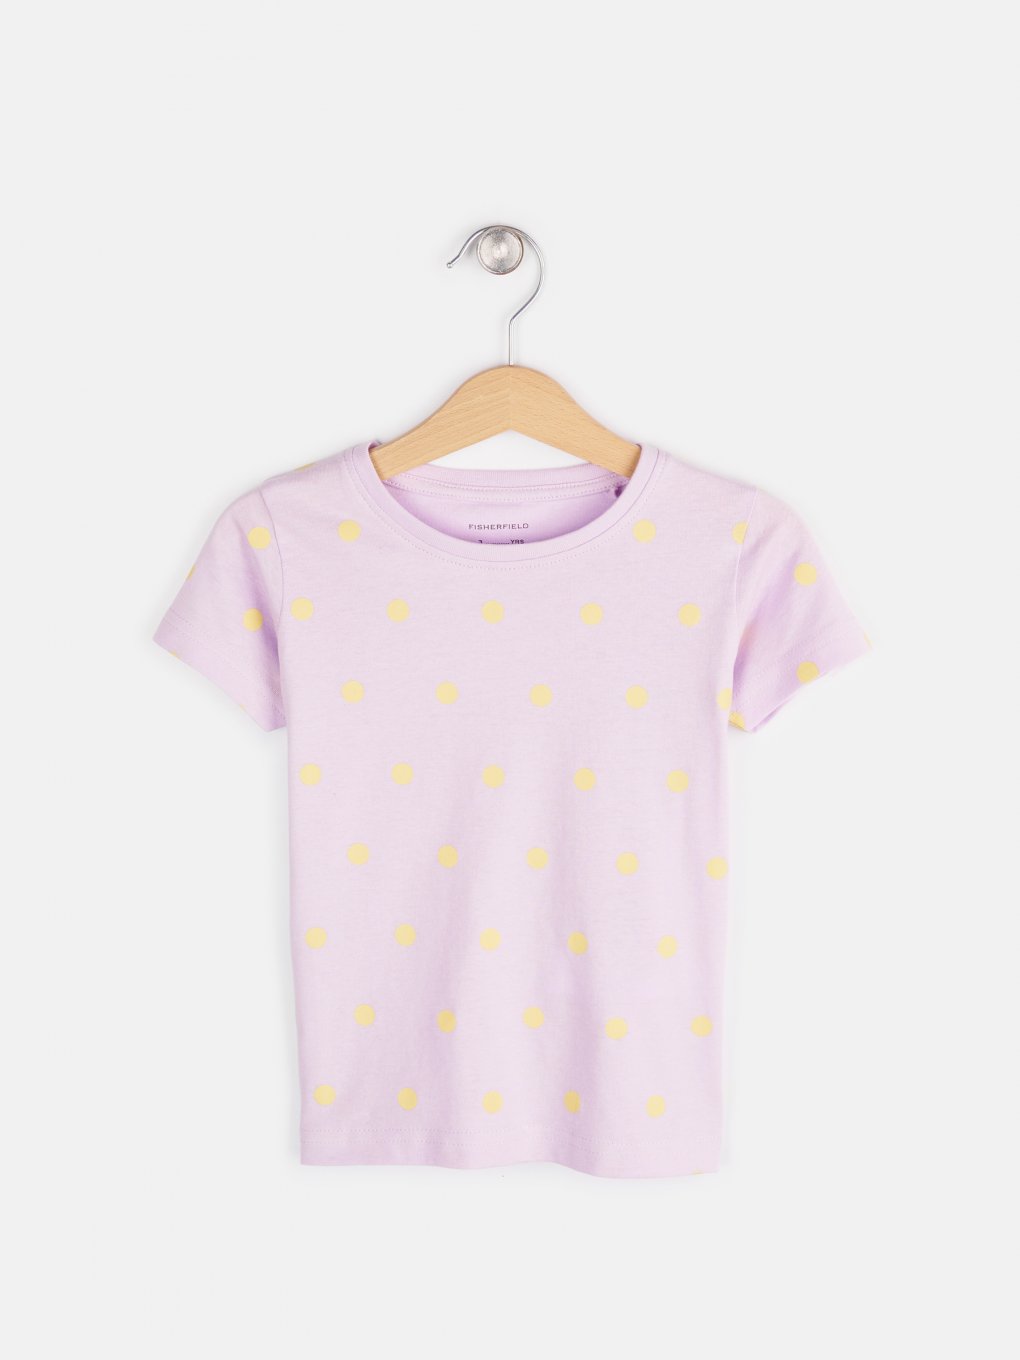 Polka dot print cotton t-shirt